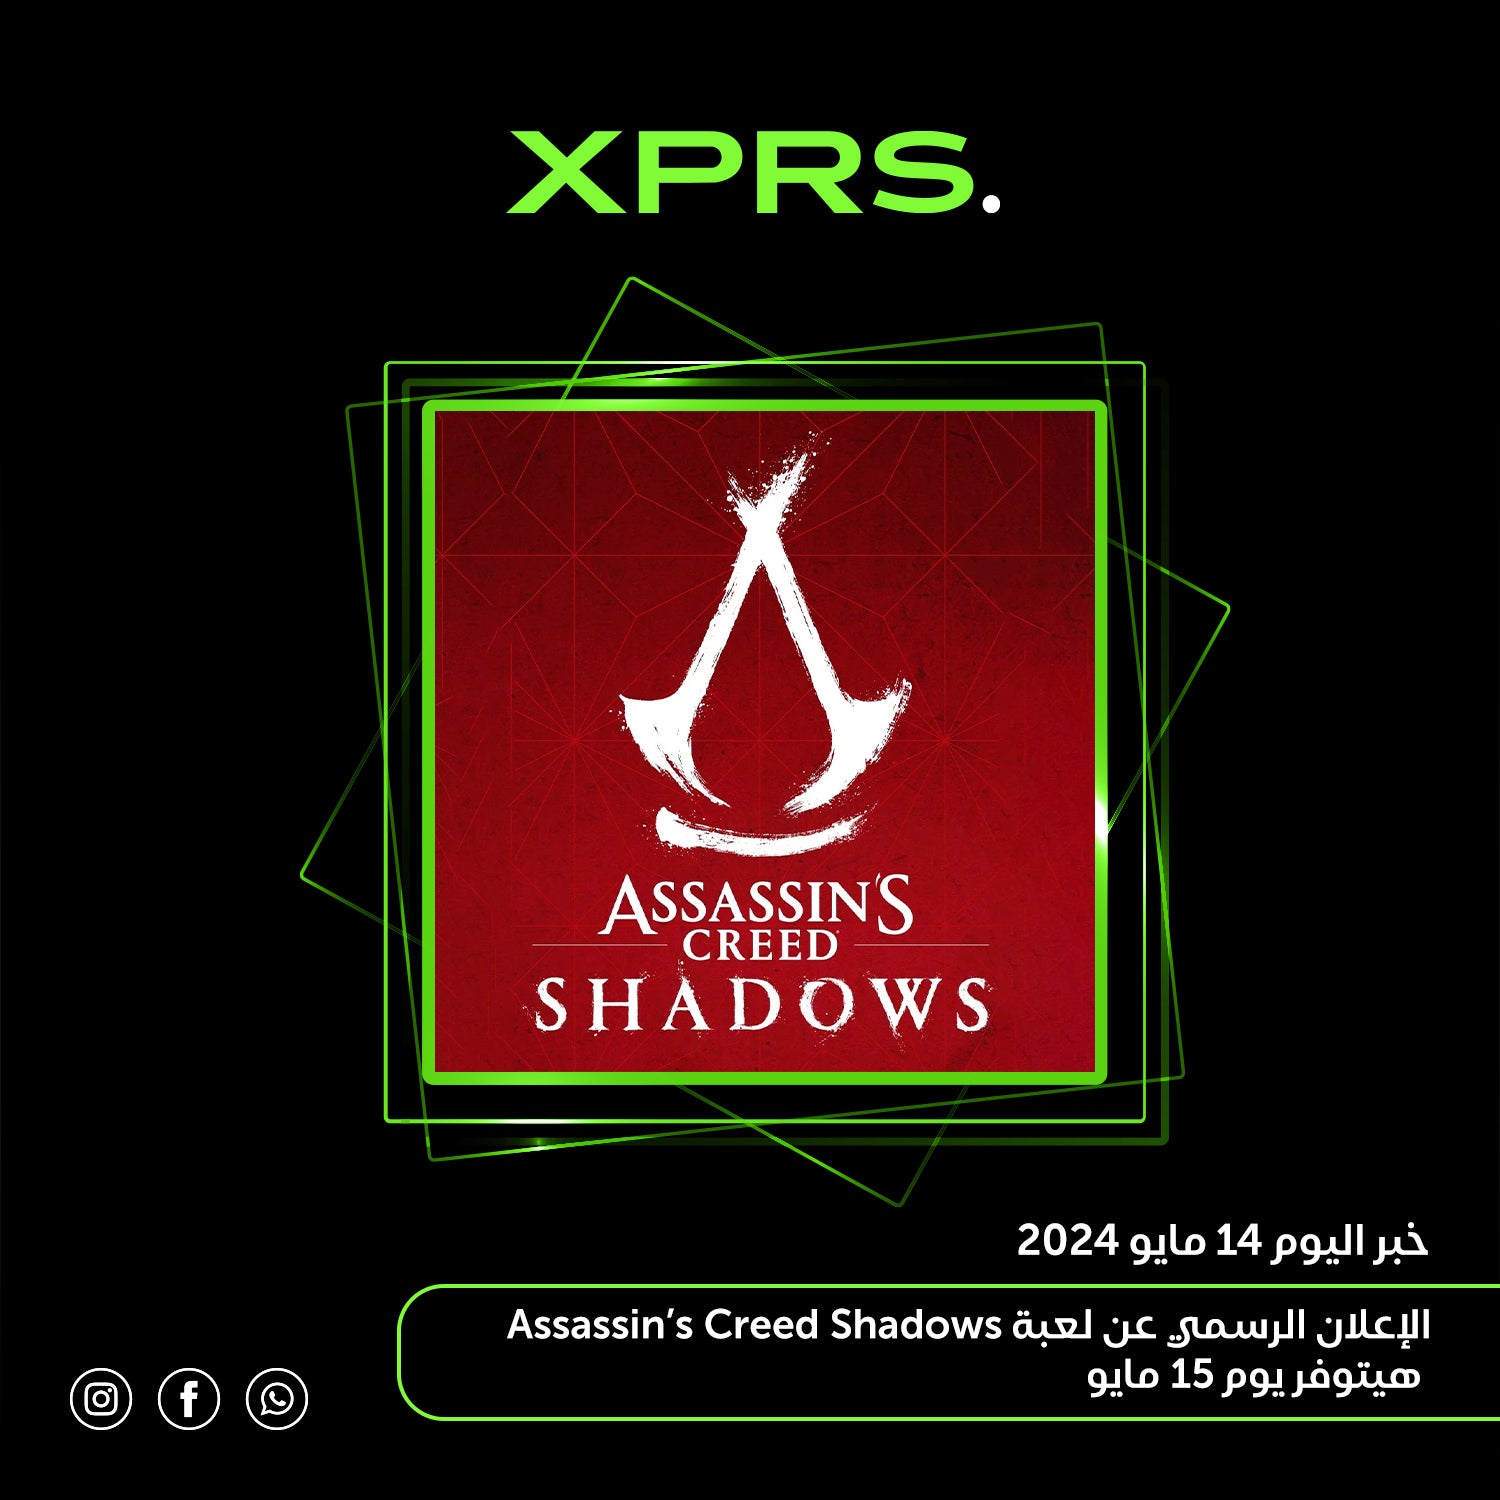 Finally, Assassin’s Creed Shadows has been officially announced. - XPRS